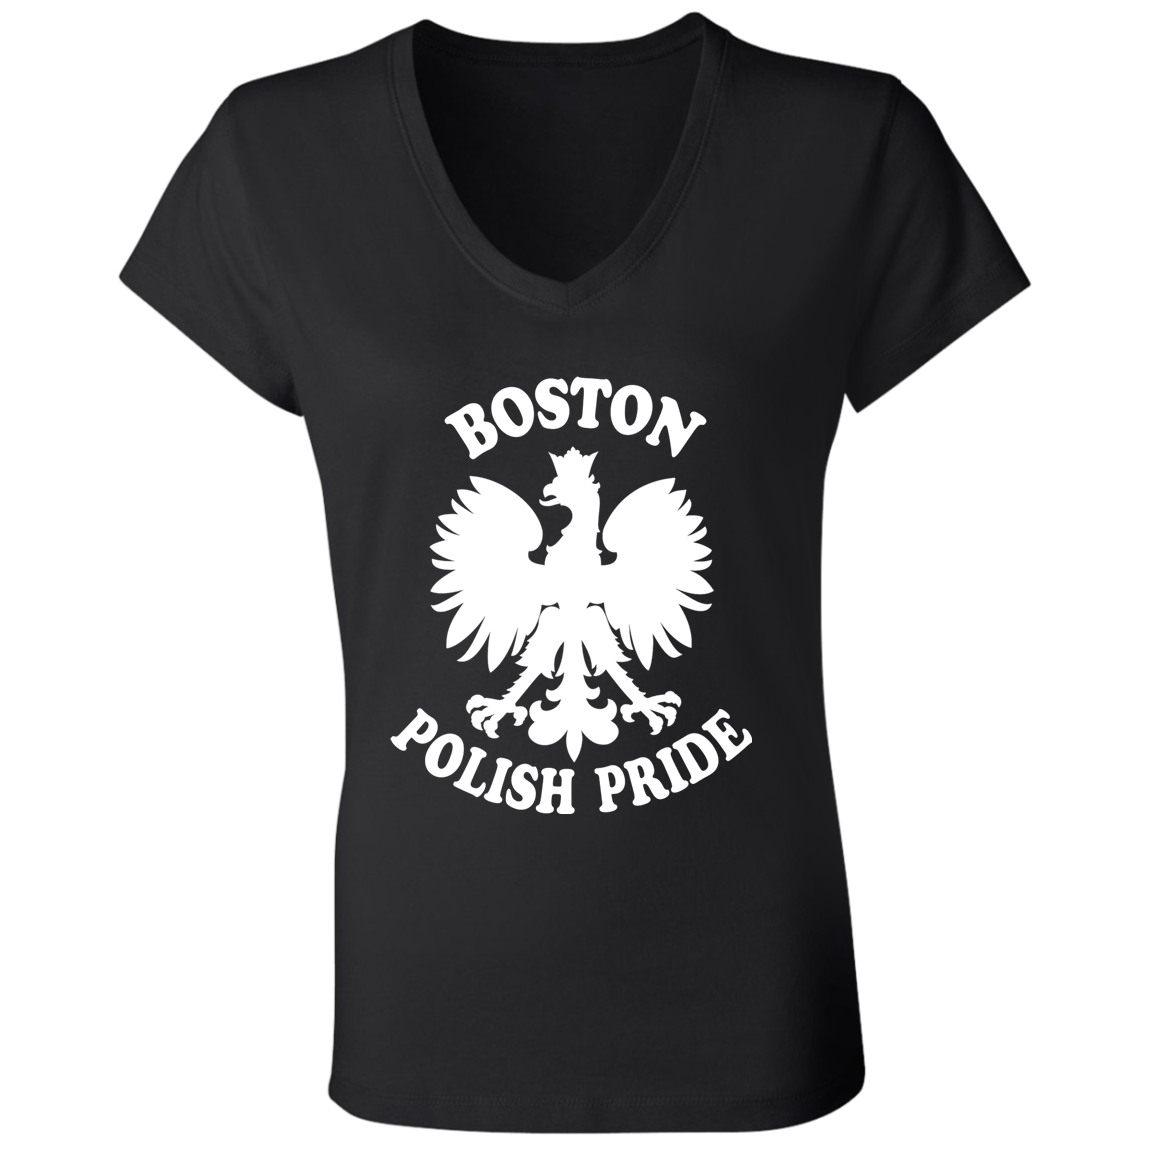 Boston Polish Pride Apparel CustomCat B6005 Ladies' Jersey V-Neck T-Shirt Black S